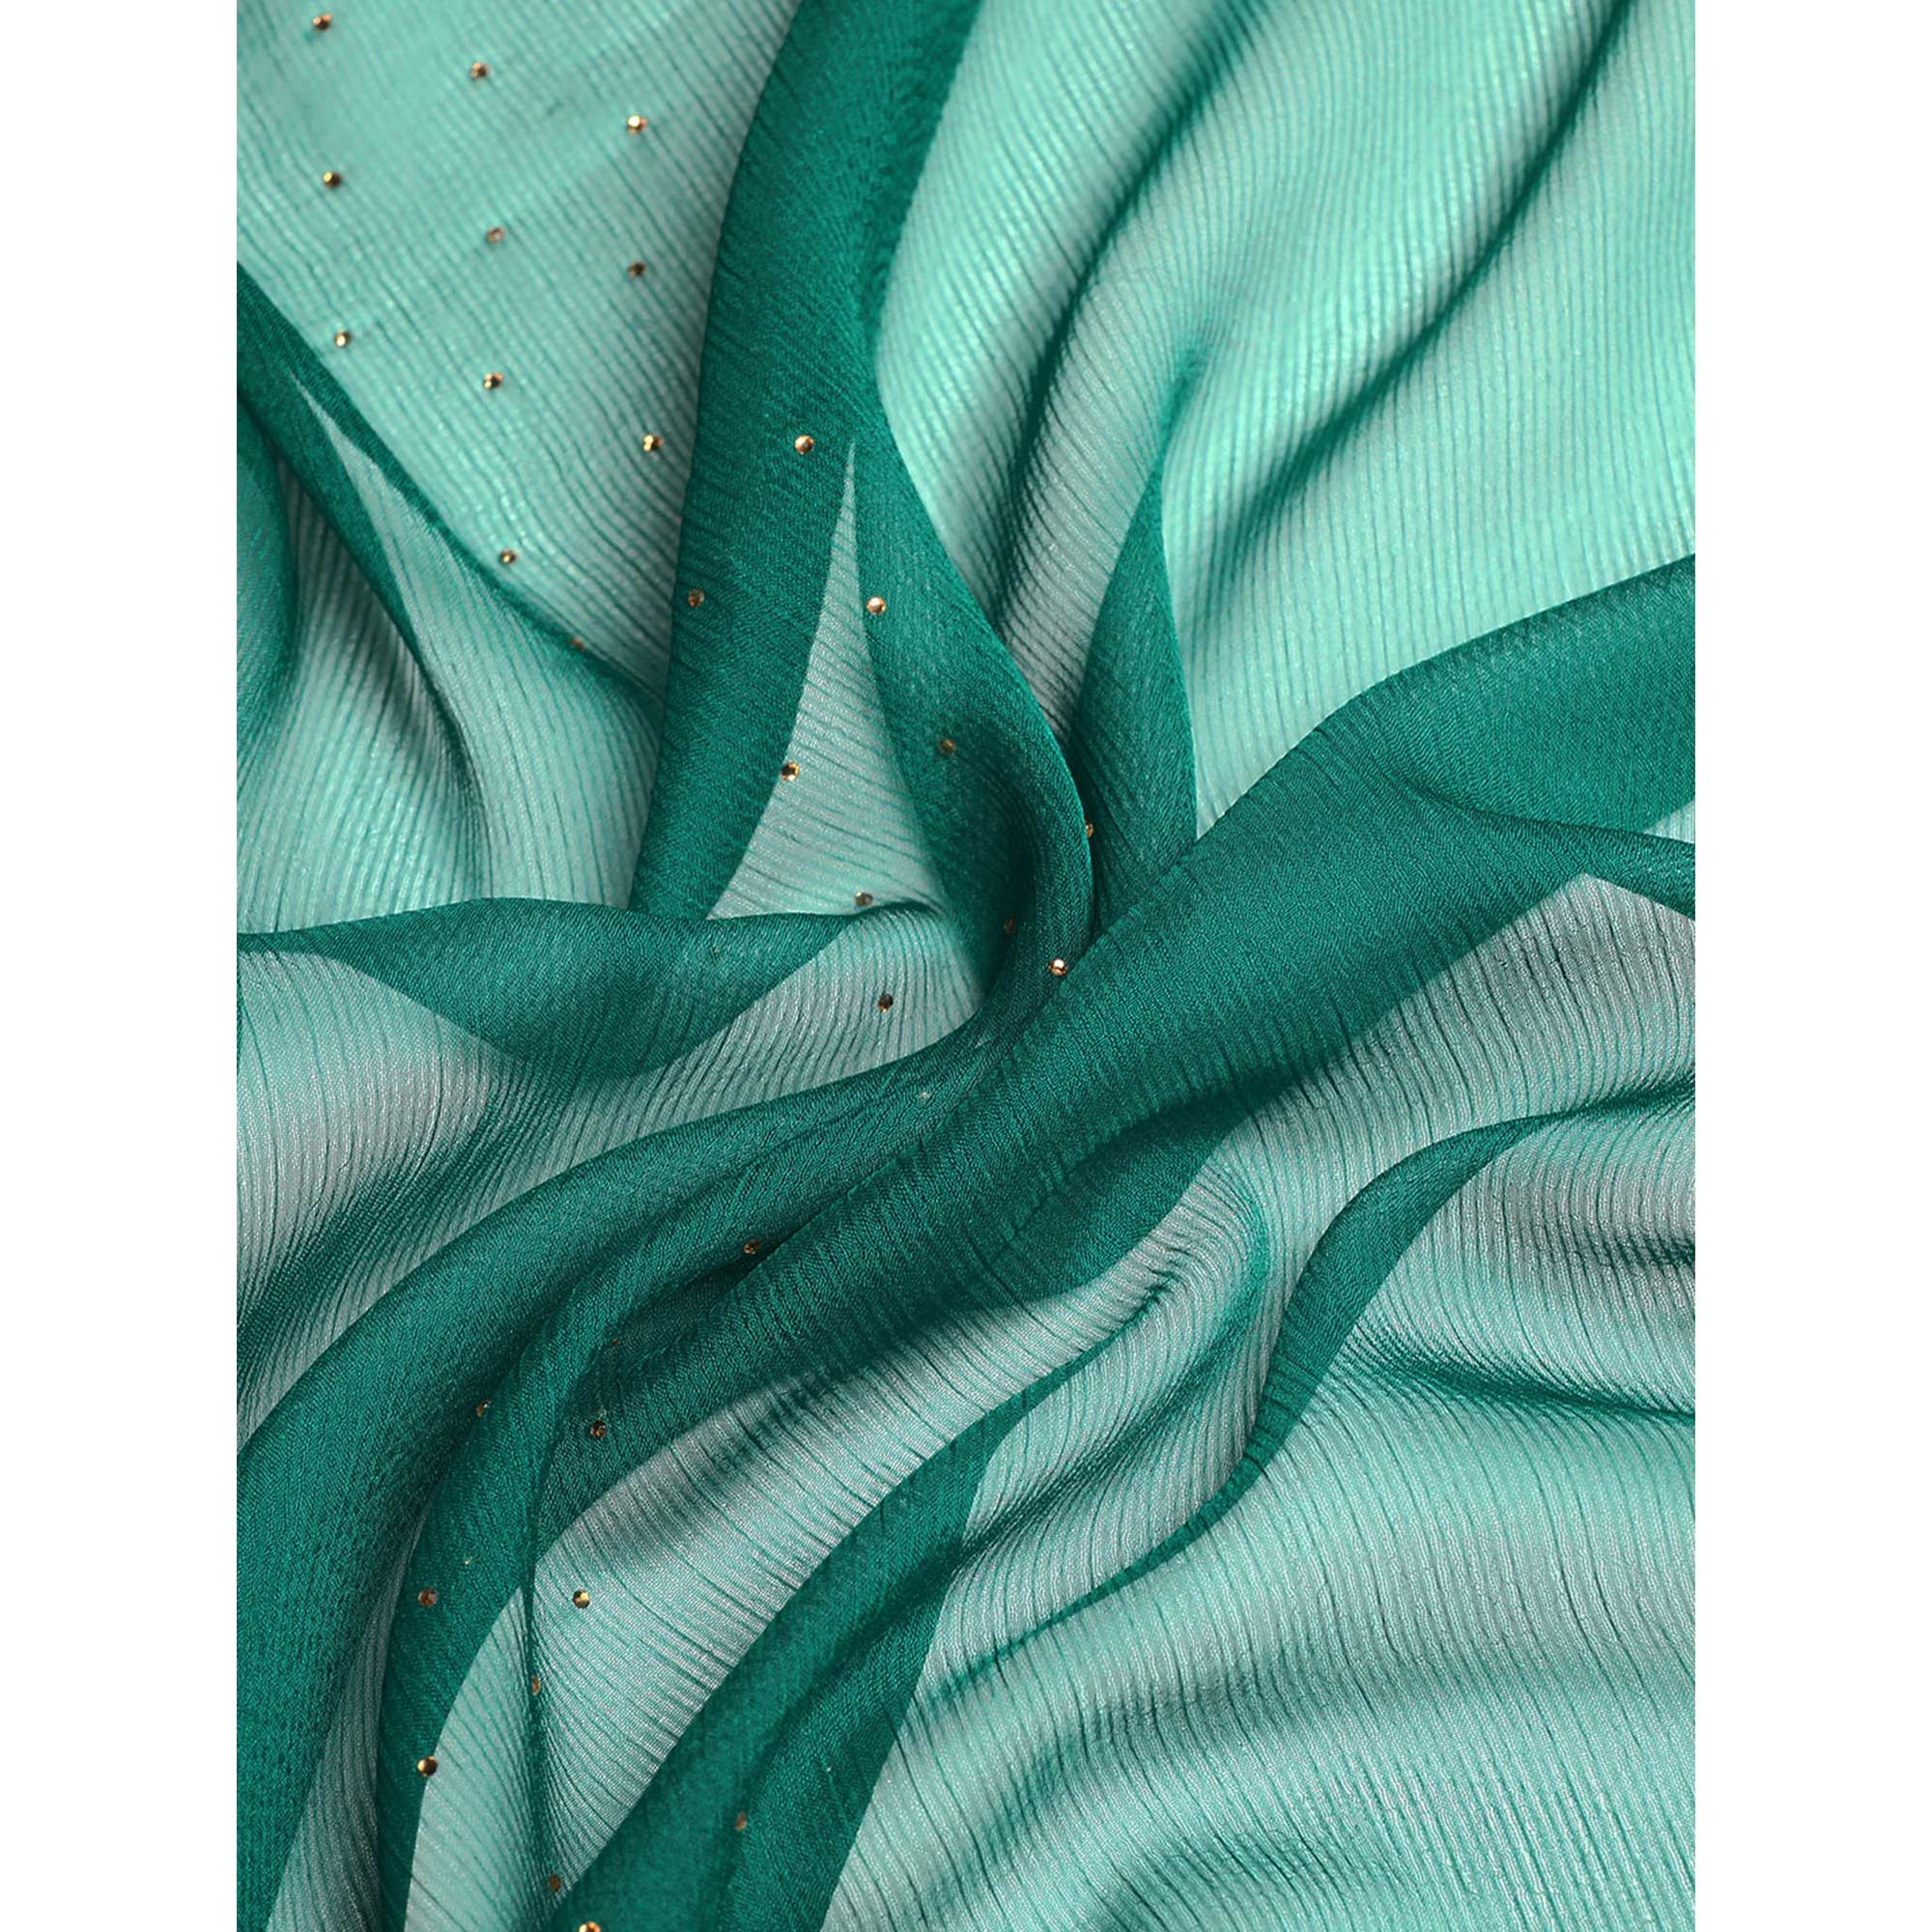 Turquoise Green Swarovski With Embroidery Work Viscose Chiffon Saree